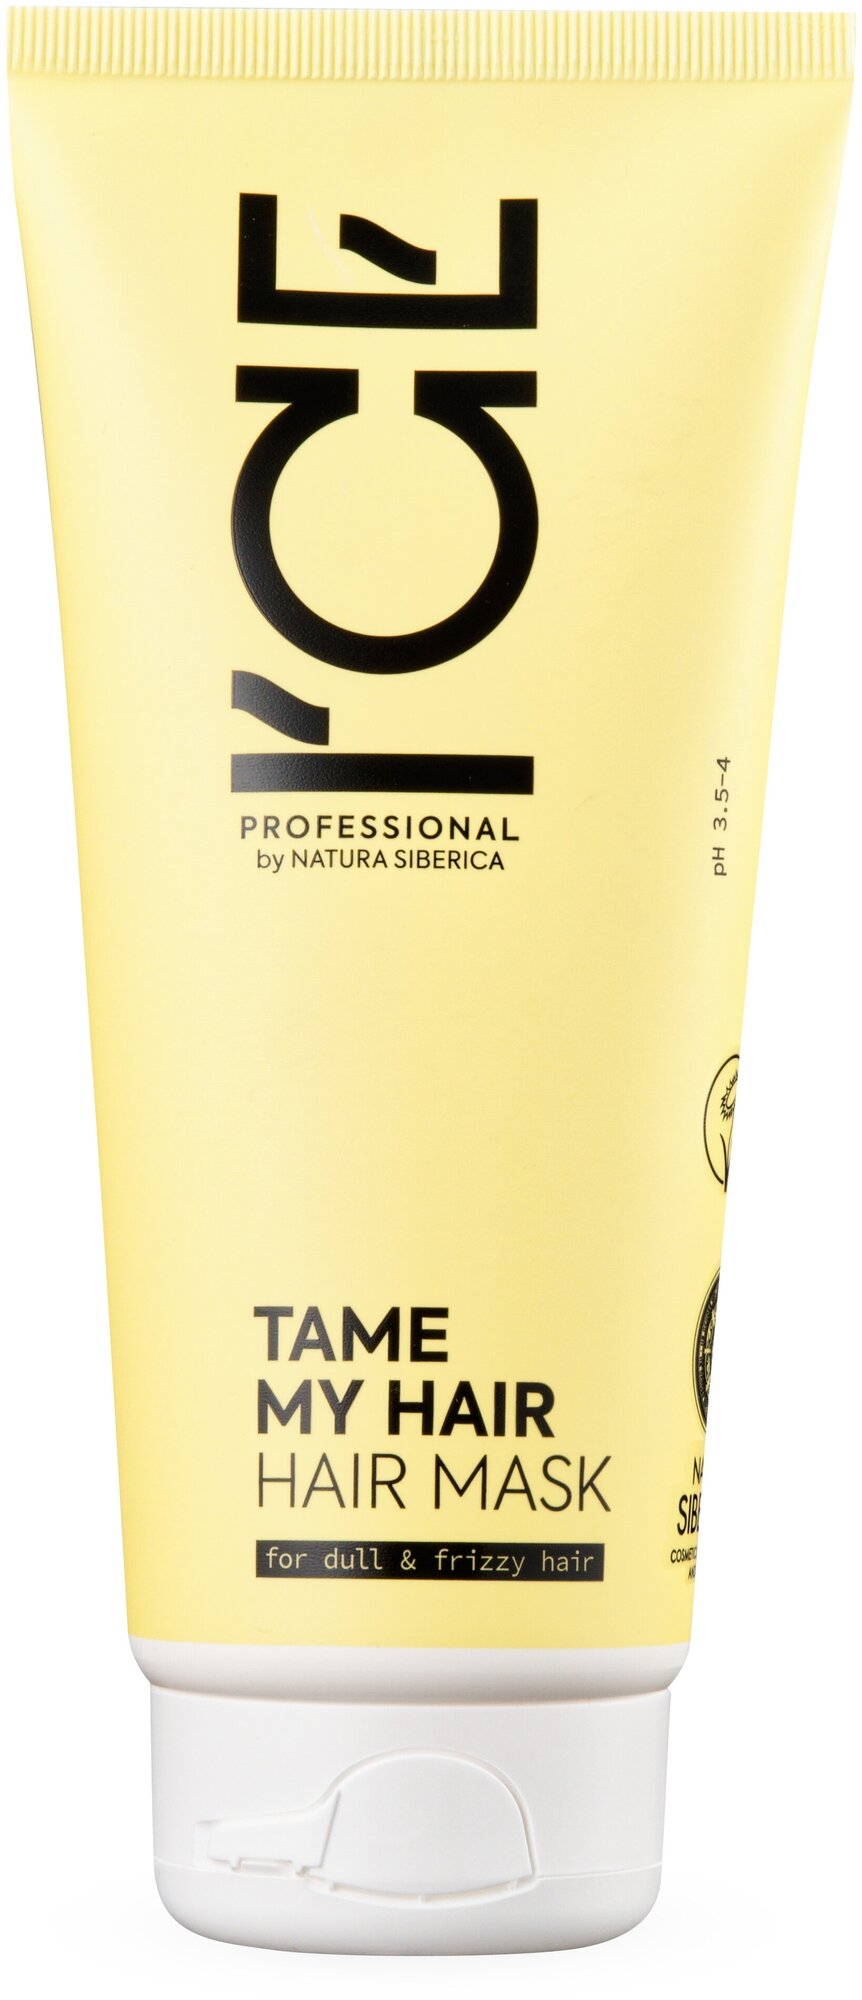 ICE PROFESSIONAL by NATURA SIBERICA TAME MY HAIR MASK / Маска для тусклых и вьющихся волос 200 мл